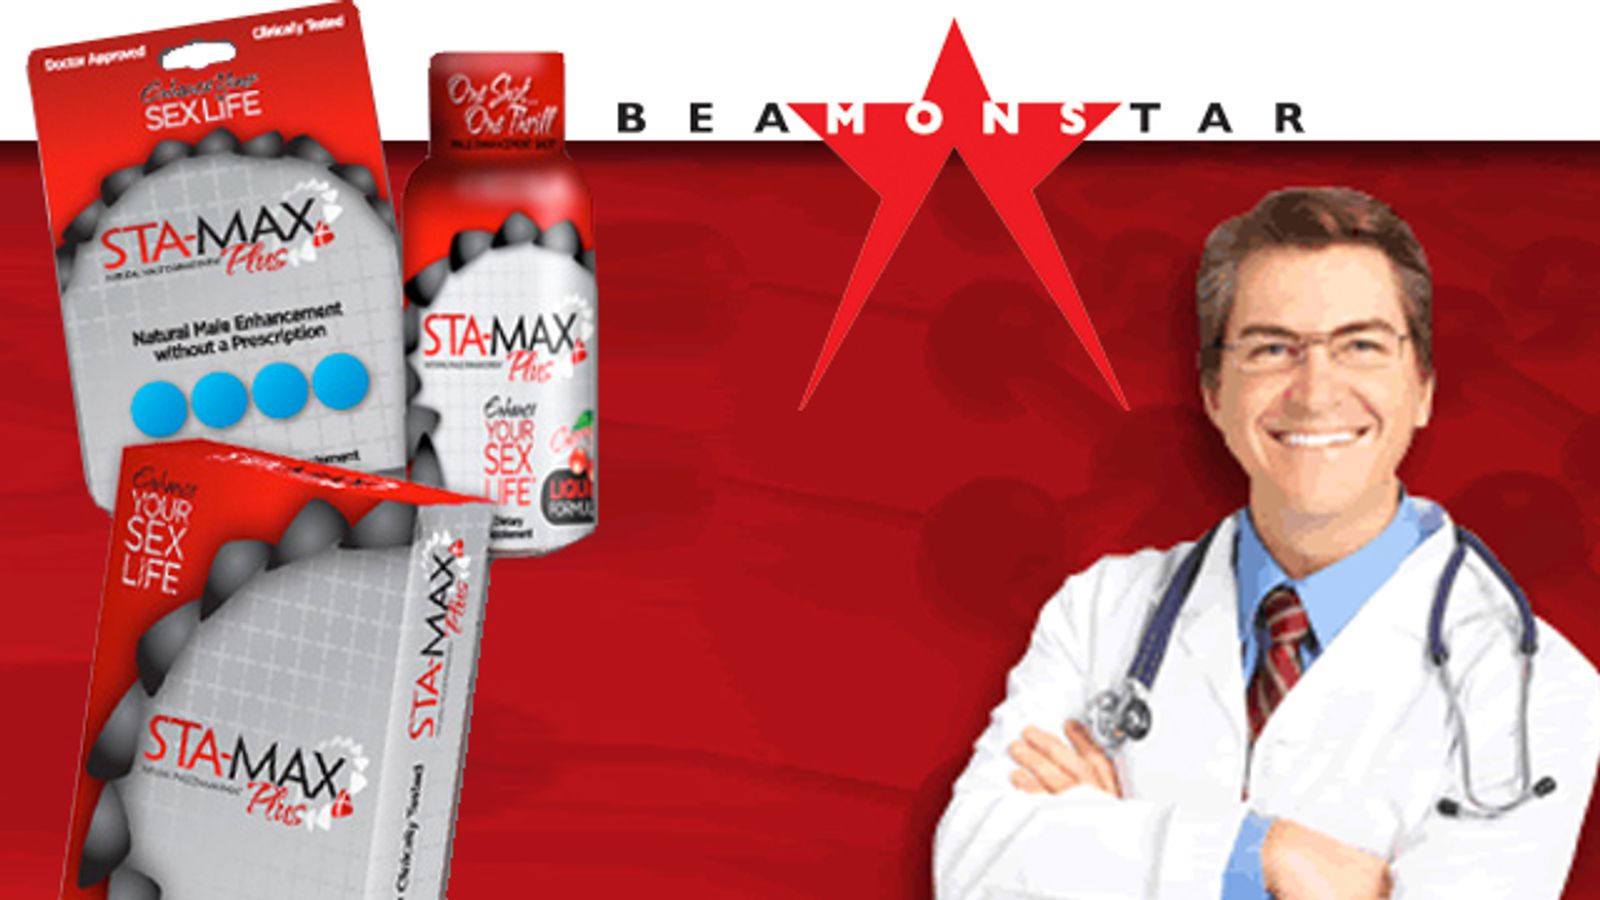 BeaMonstar Stimulates Interest in Sta-Max Plus Debut